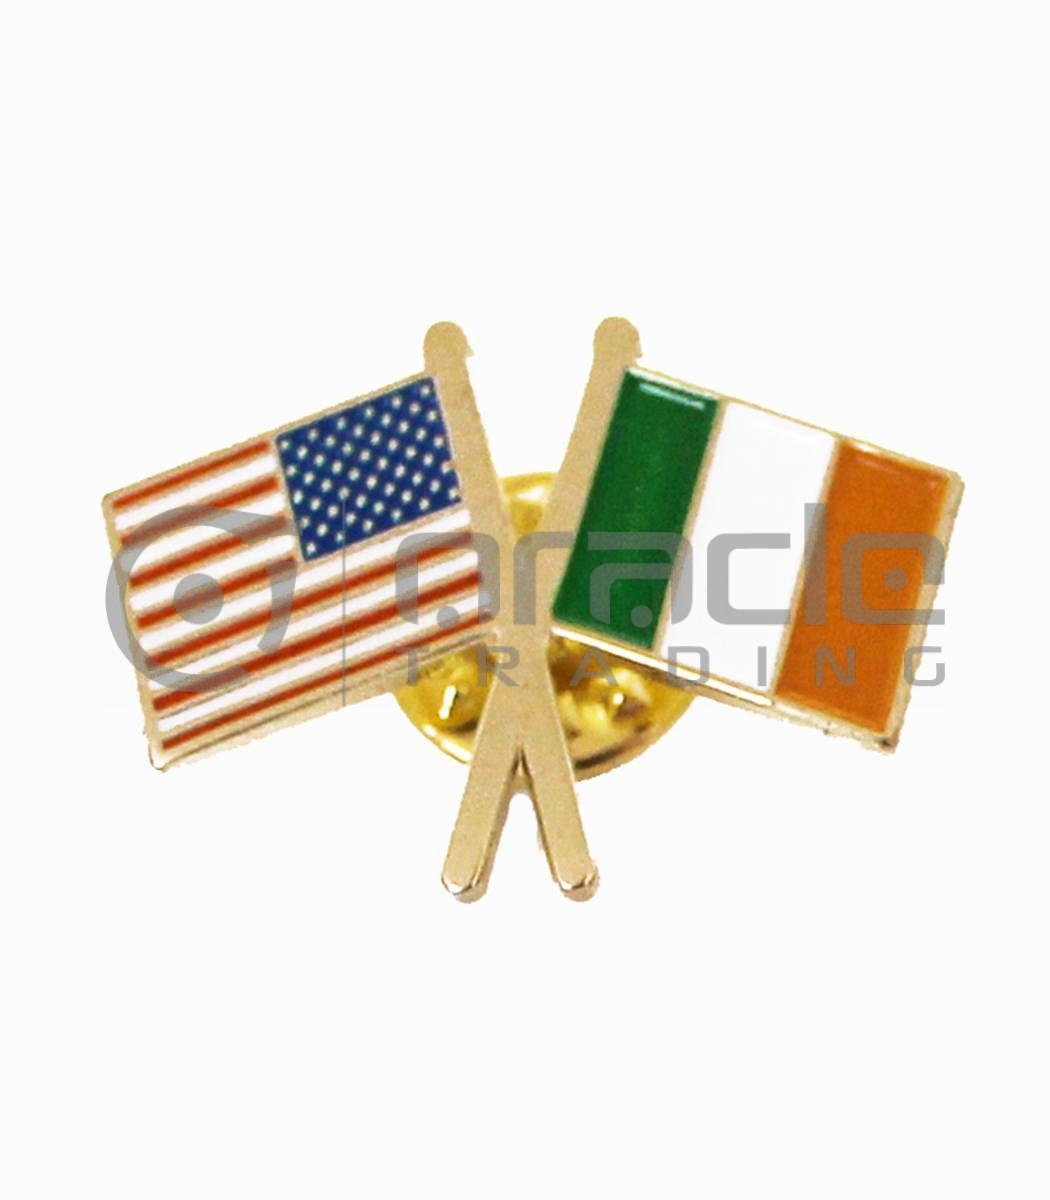 Ireland / USA Friendship Lapel Pin